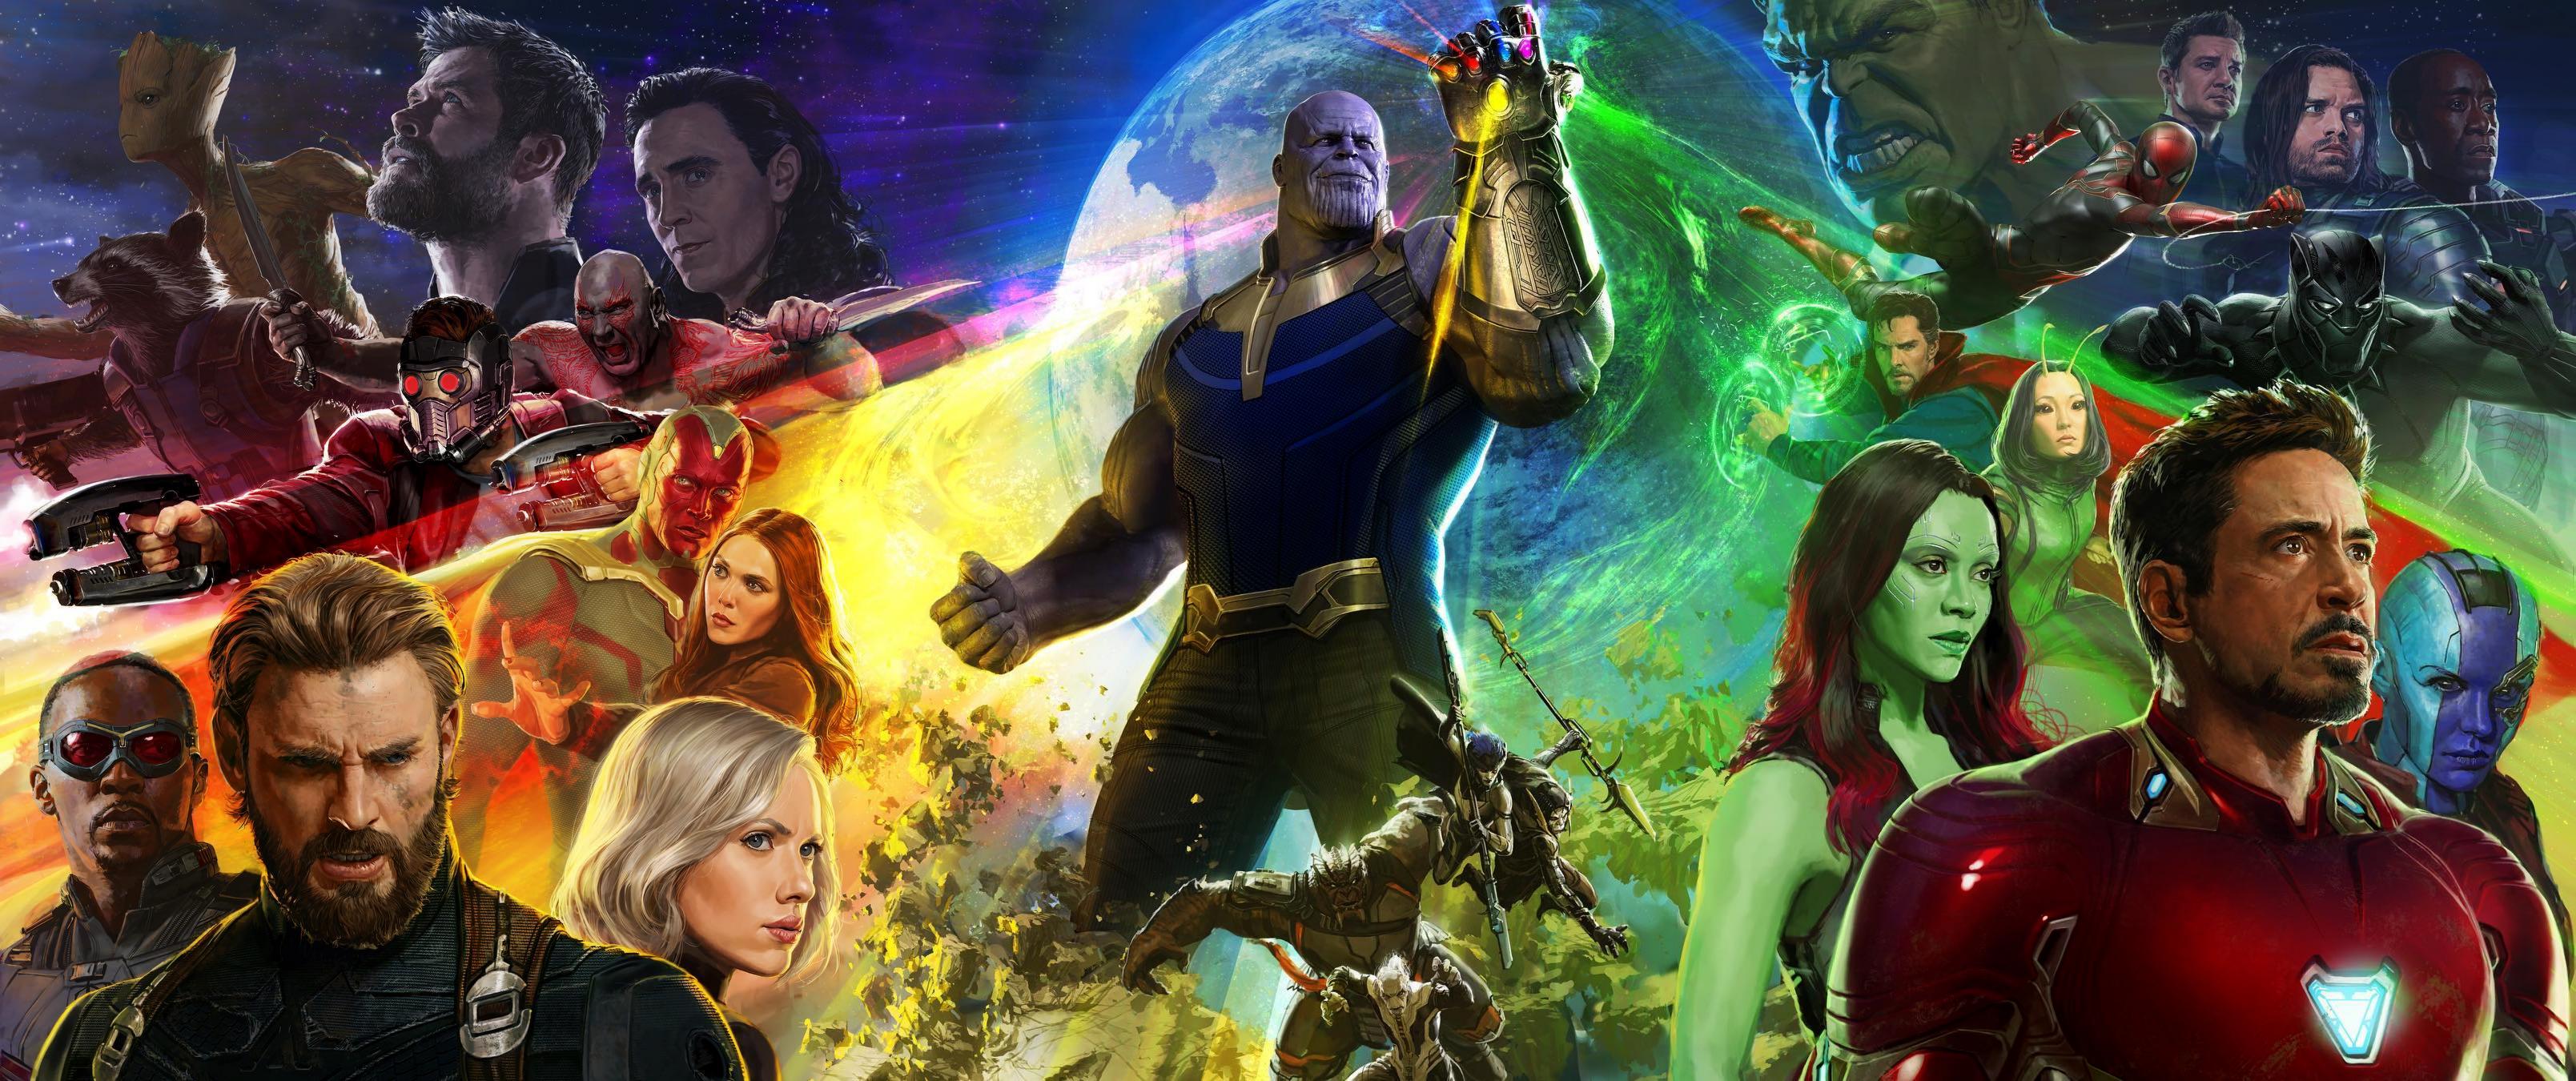 Avengers Infinity War 2018 Digital Art Wallpapers